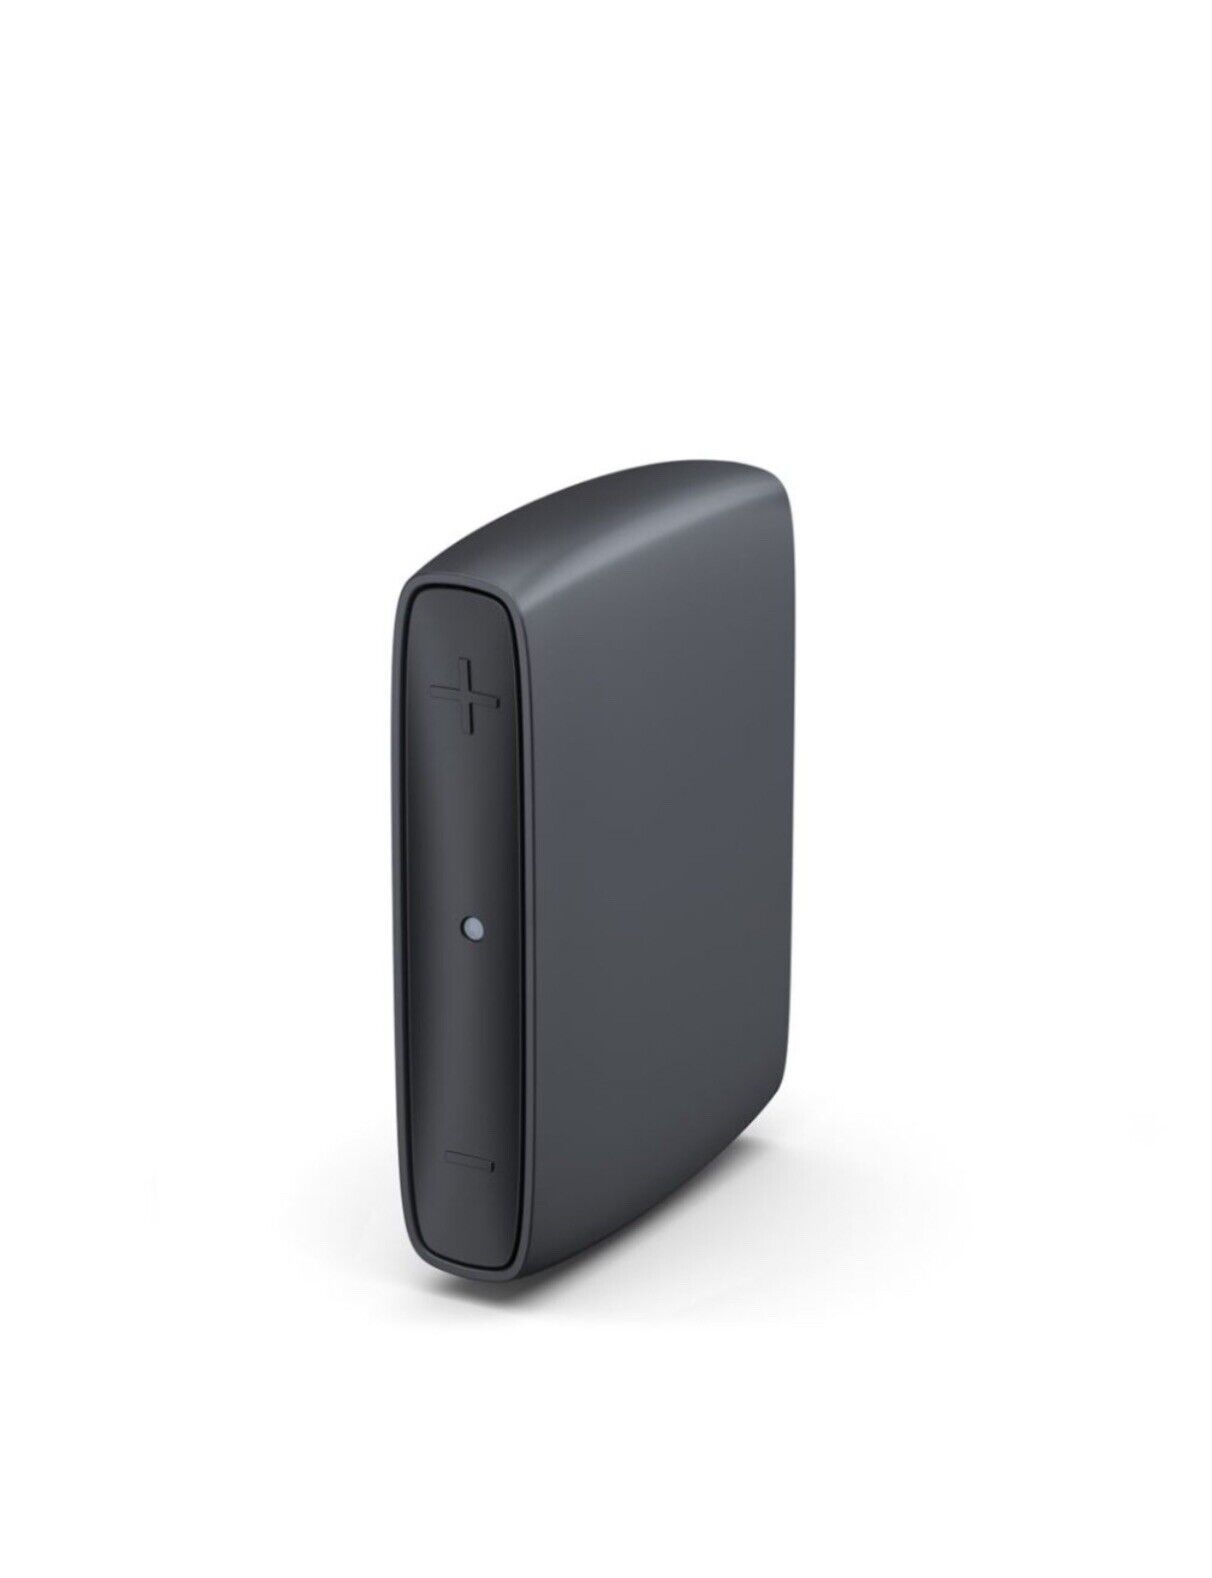 Resound TV+ For Nexia Hearing Aids. Auracast & Bluetooth Compatible TV Streamer